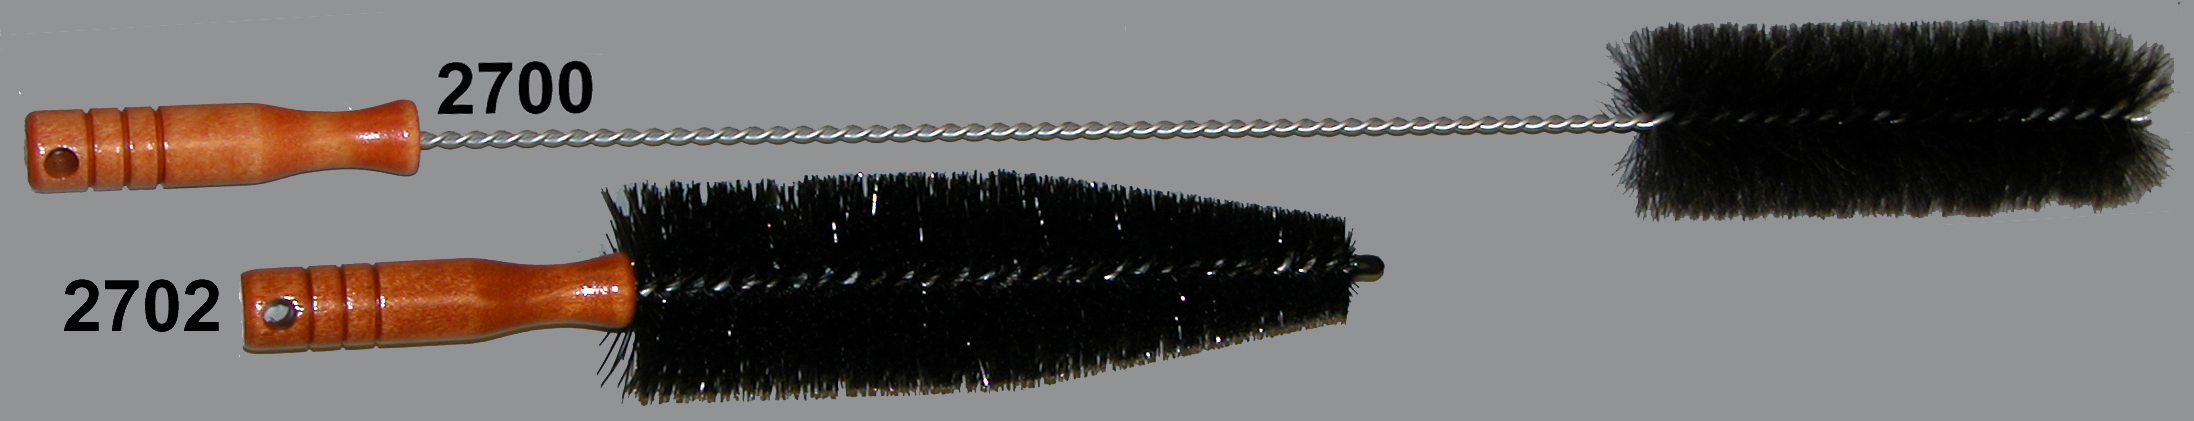 2700 Long Handled Lint Trap Brush, 27